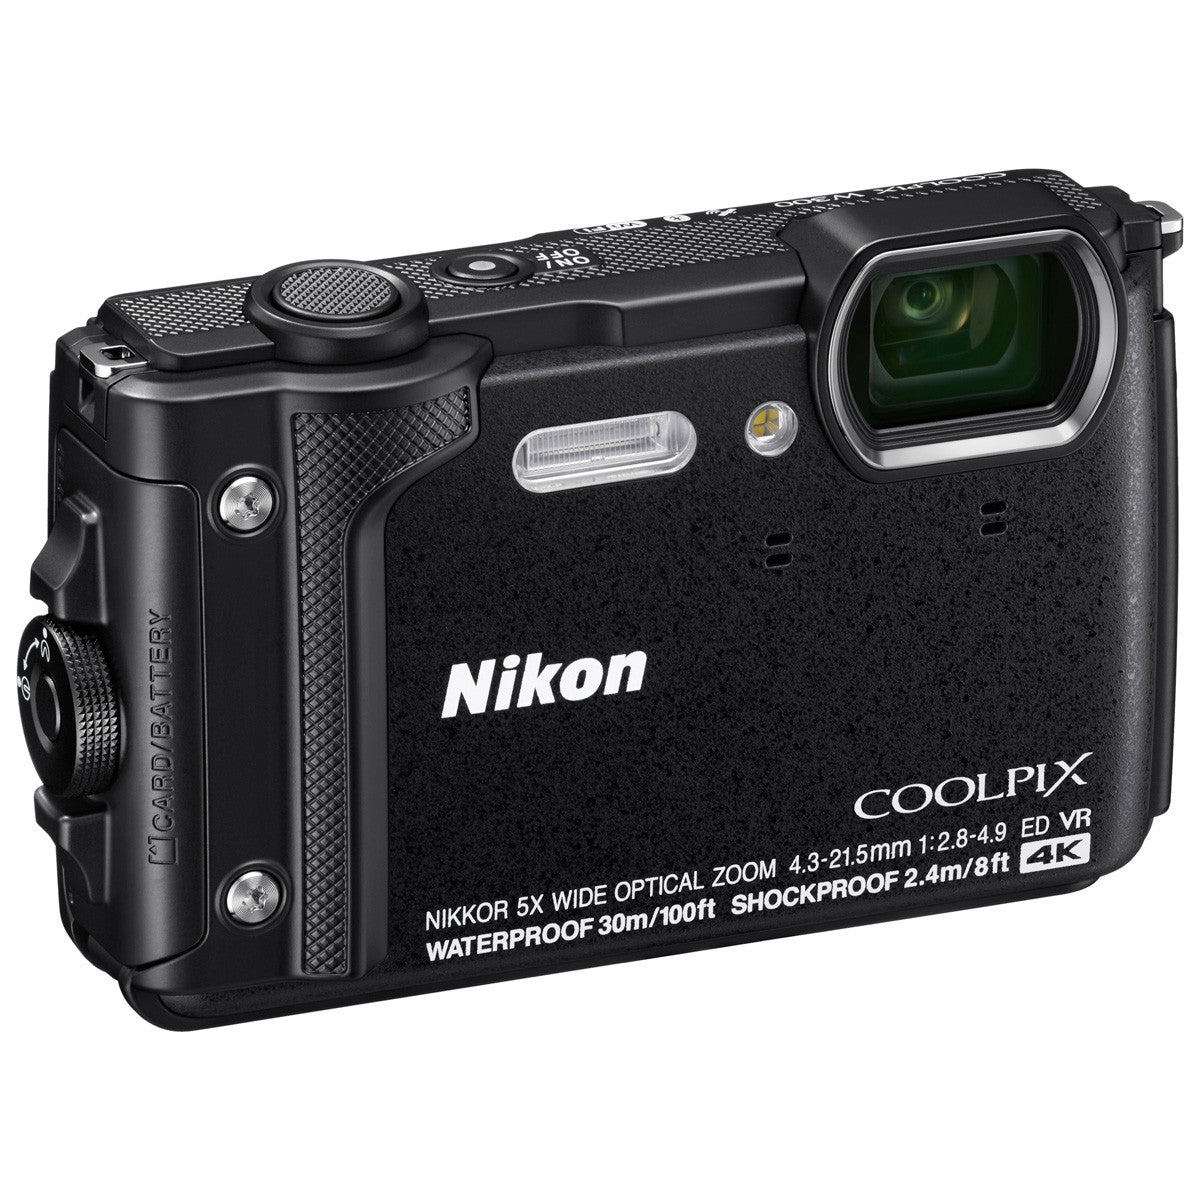 Nikon Coolpix W300 Digital Camera (Black)